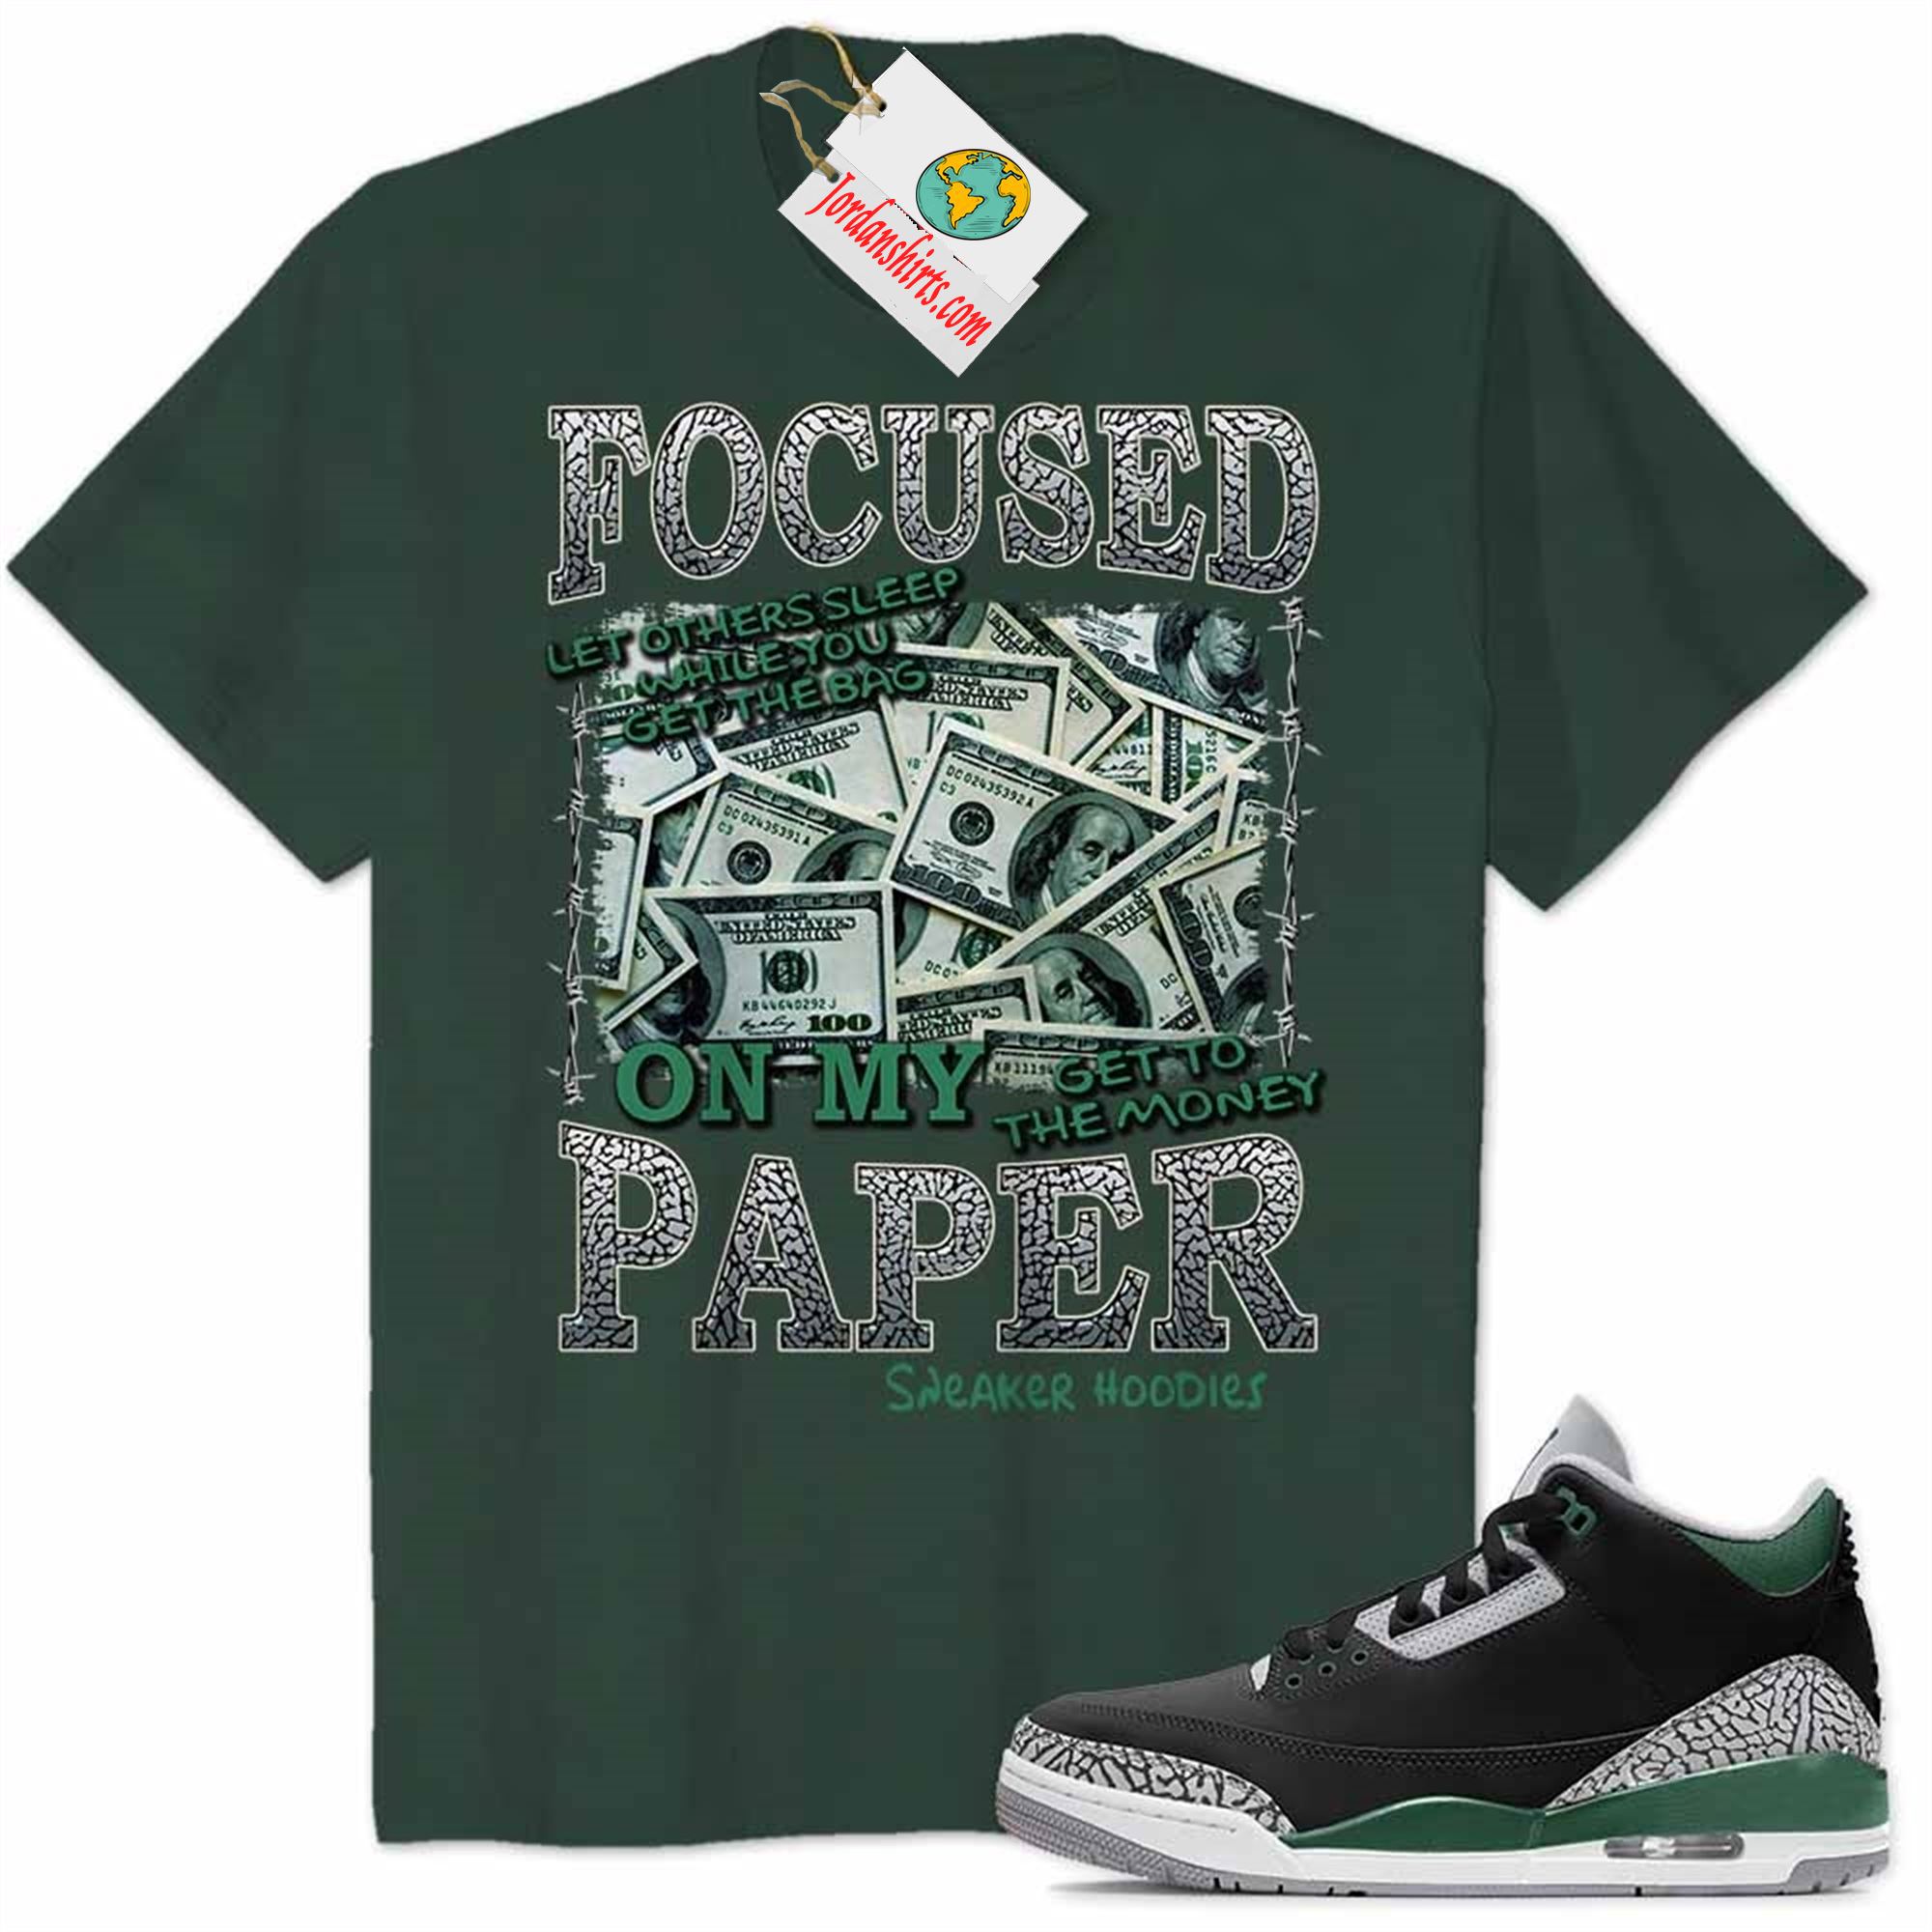 Jordan 3 Shirt, Focused On My Paper Money Forest Air Jordan 3 Pine Green 3s Plus Size Up To 5xl